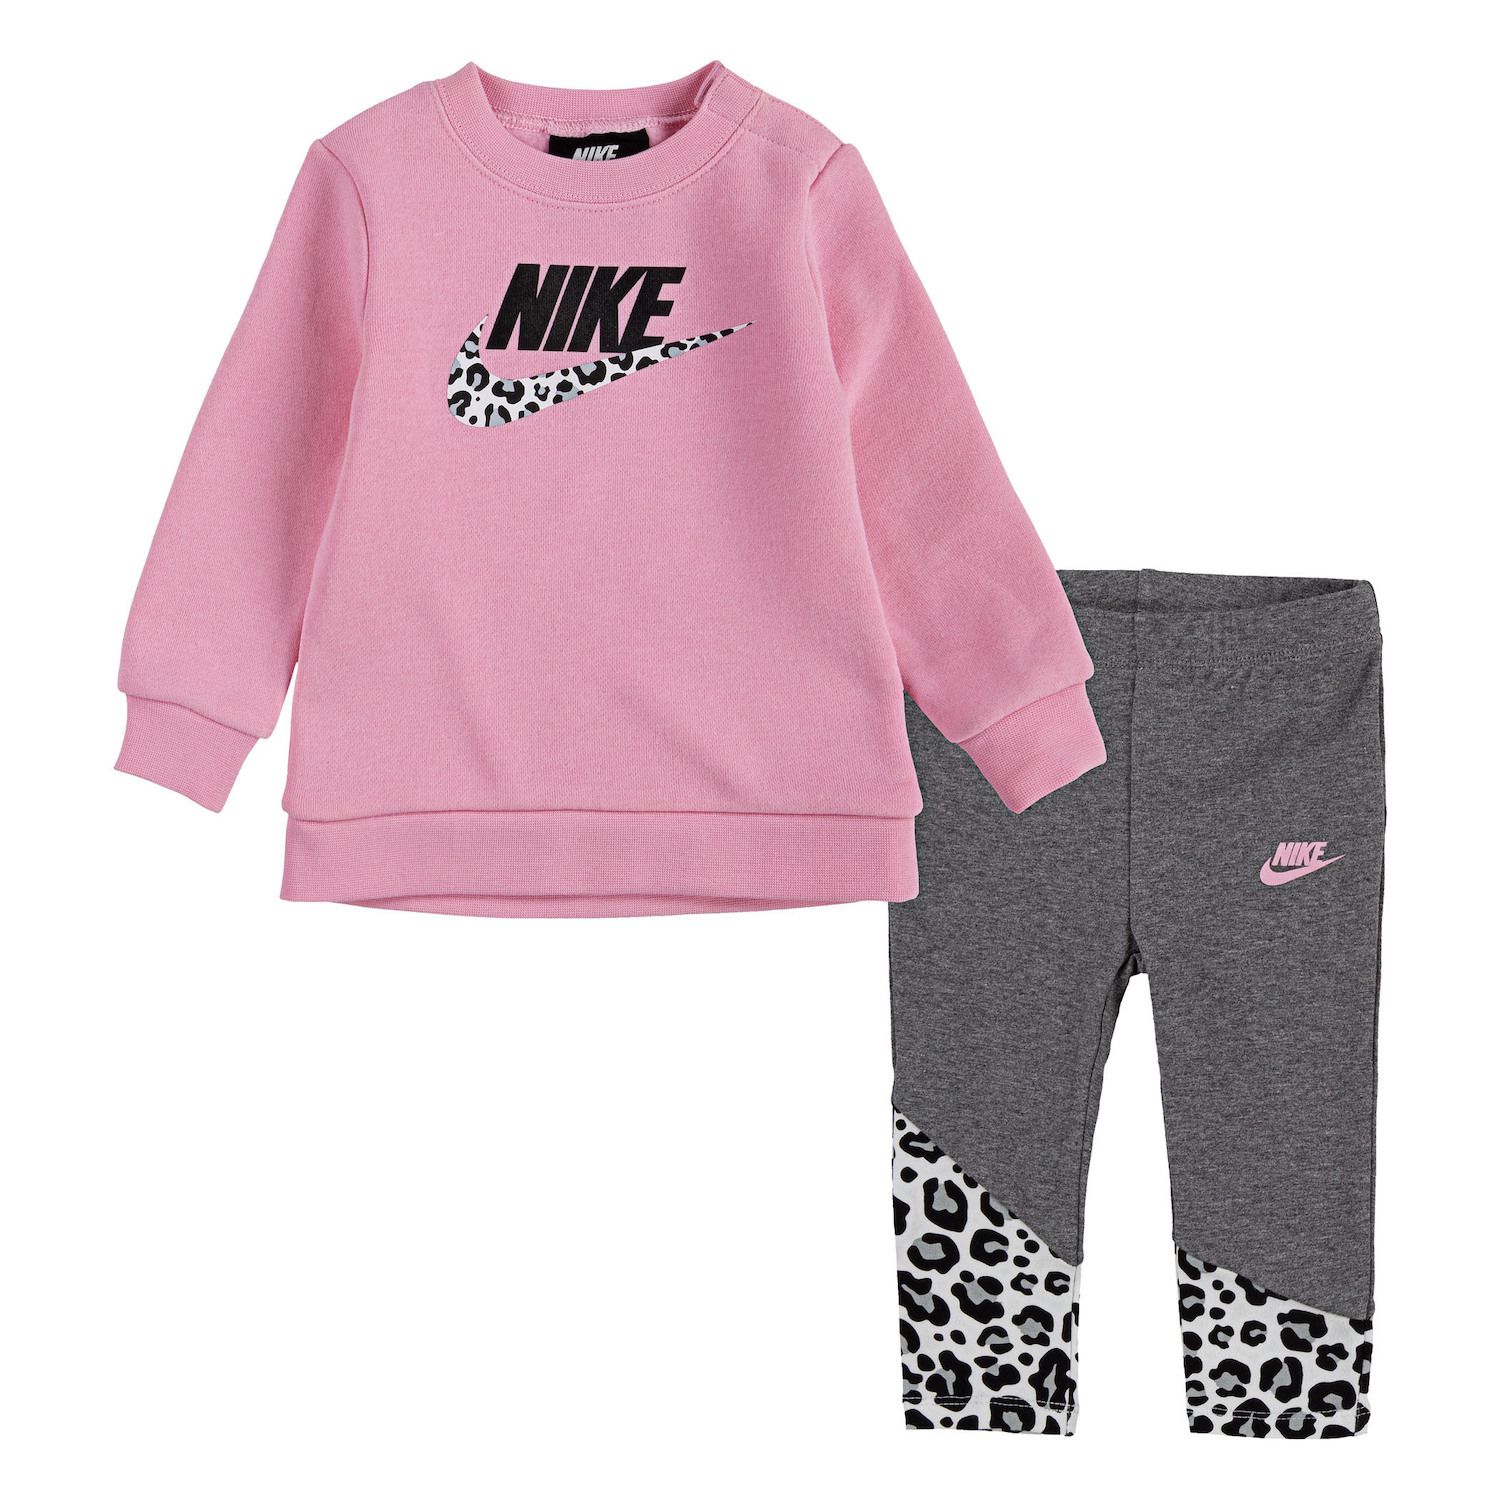 Toddler Girl Nike Leopard Printed Tunic 